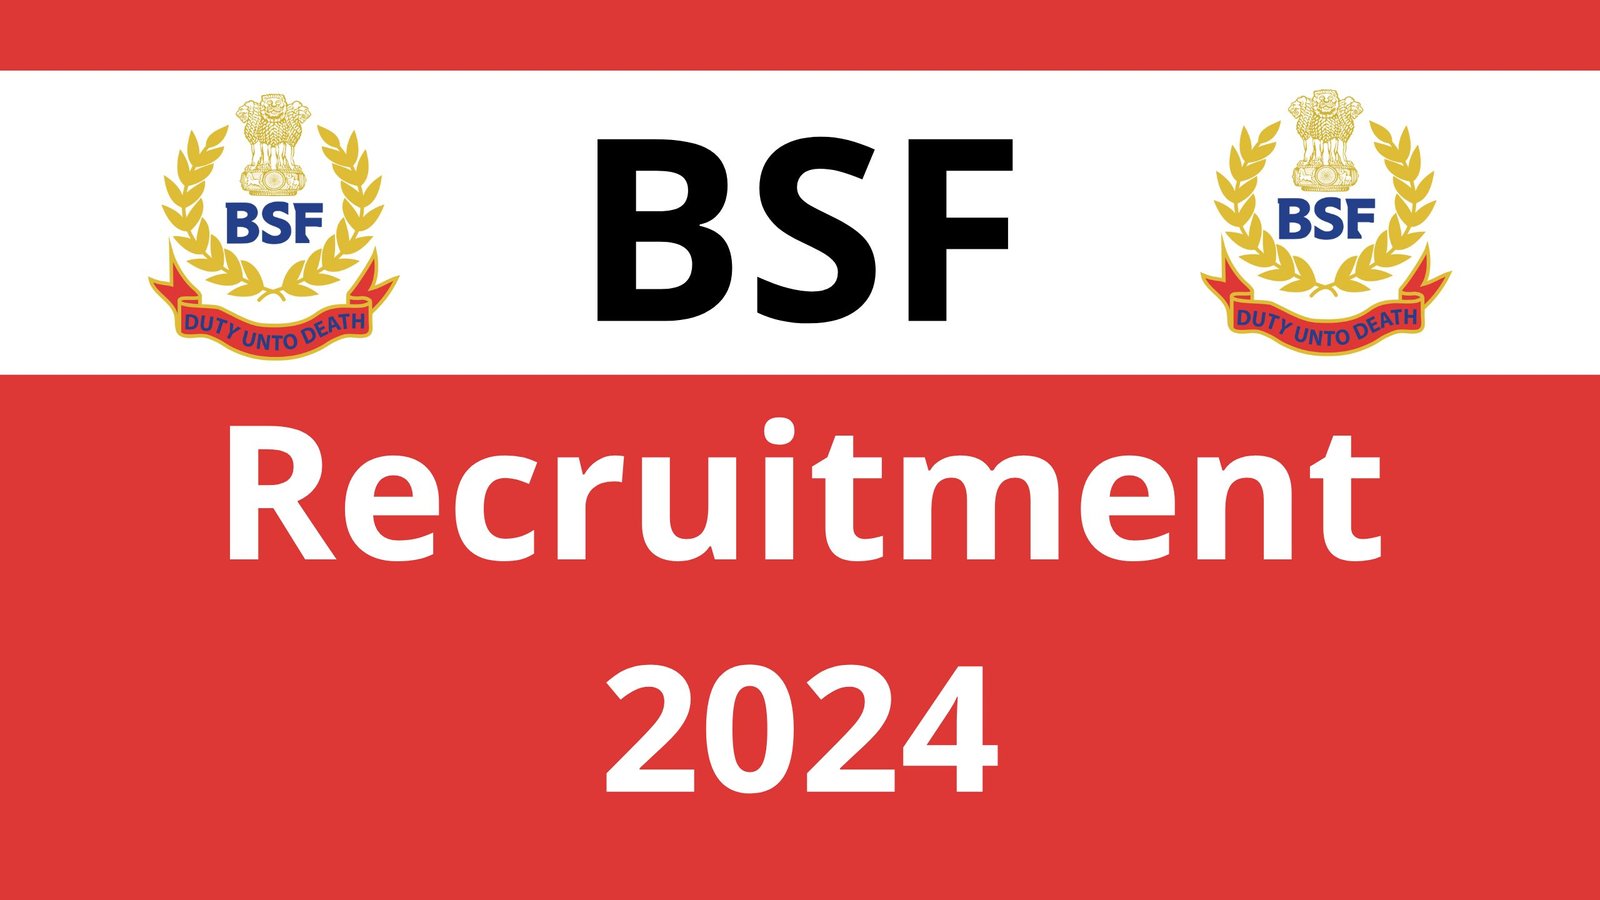 BSF ASI Recruitment 2024